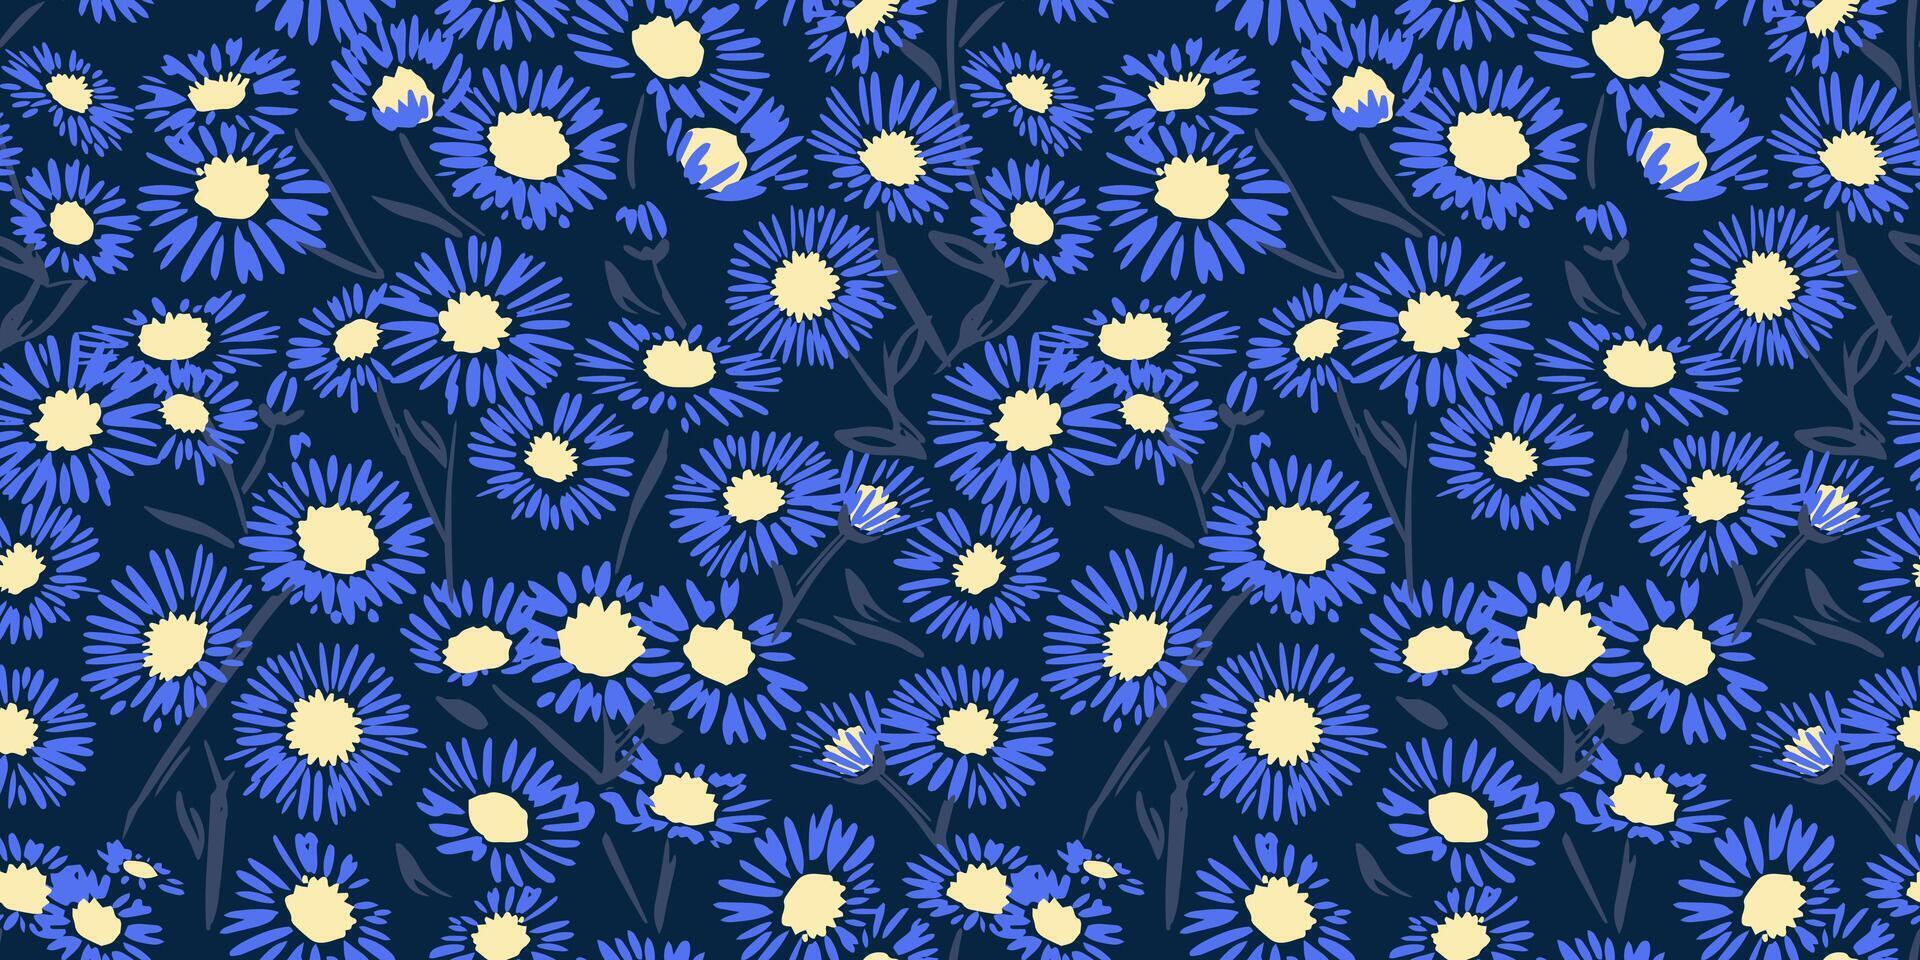 artístico forma azul floral manzanillas sin costura modelo en un oscuro negro antecedentes. vector mano dibujado ditsy flores vibrante retro impresión collage. diseño ornamento para moda, tela, interior, textil